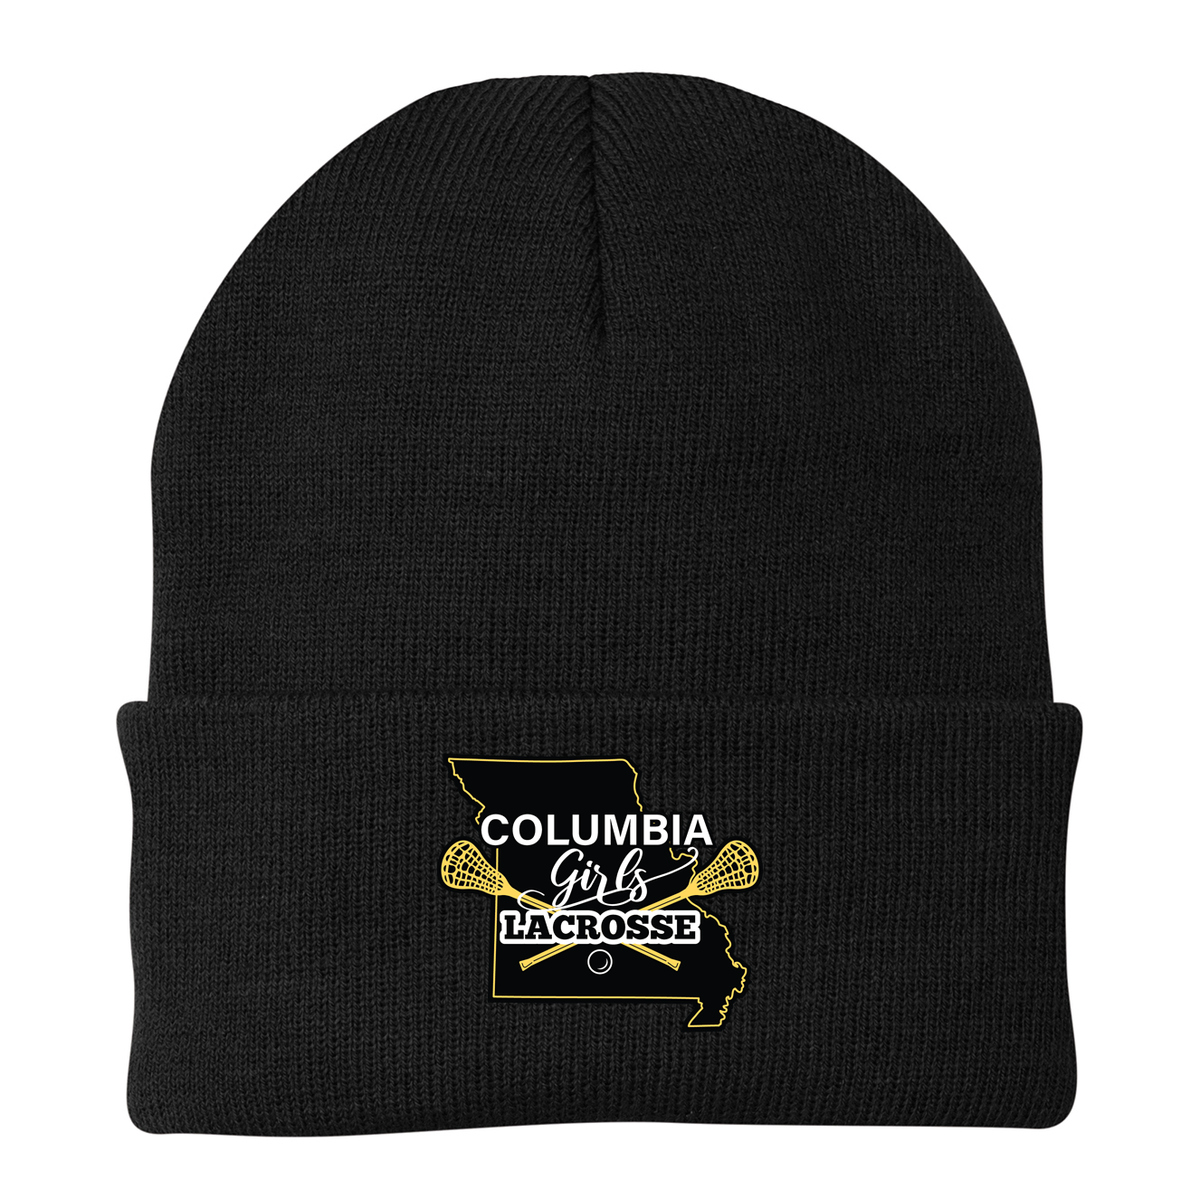 Columbia Girls Lacrosse Knit Beanie